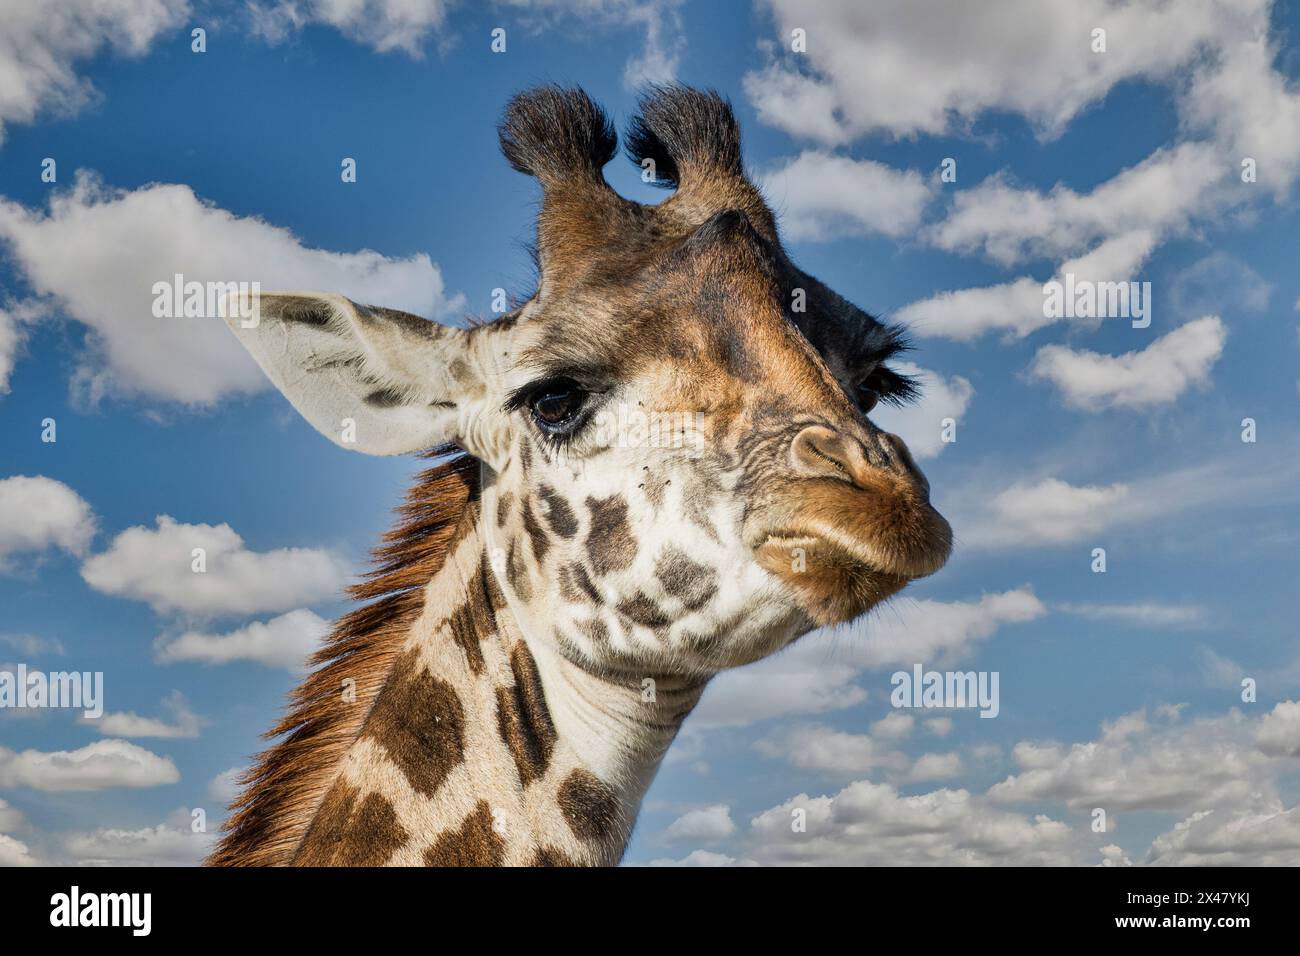 Africa, Kenya, Masai Mara National Reserve. Digital composite sky and giraffe. Stock Photo